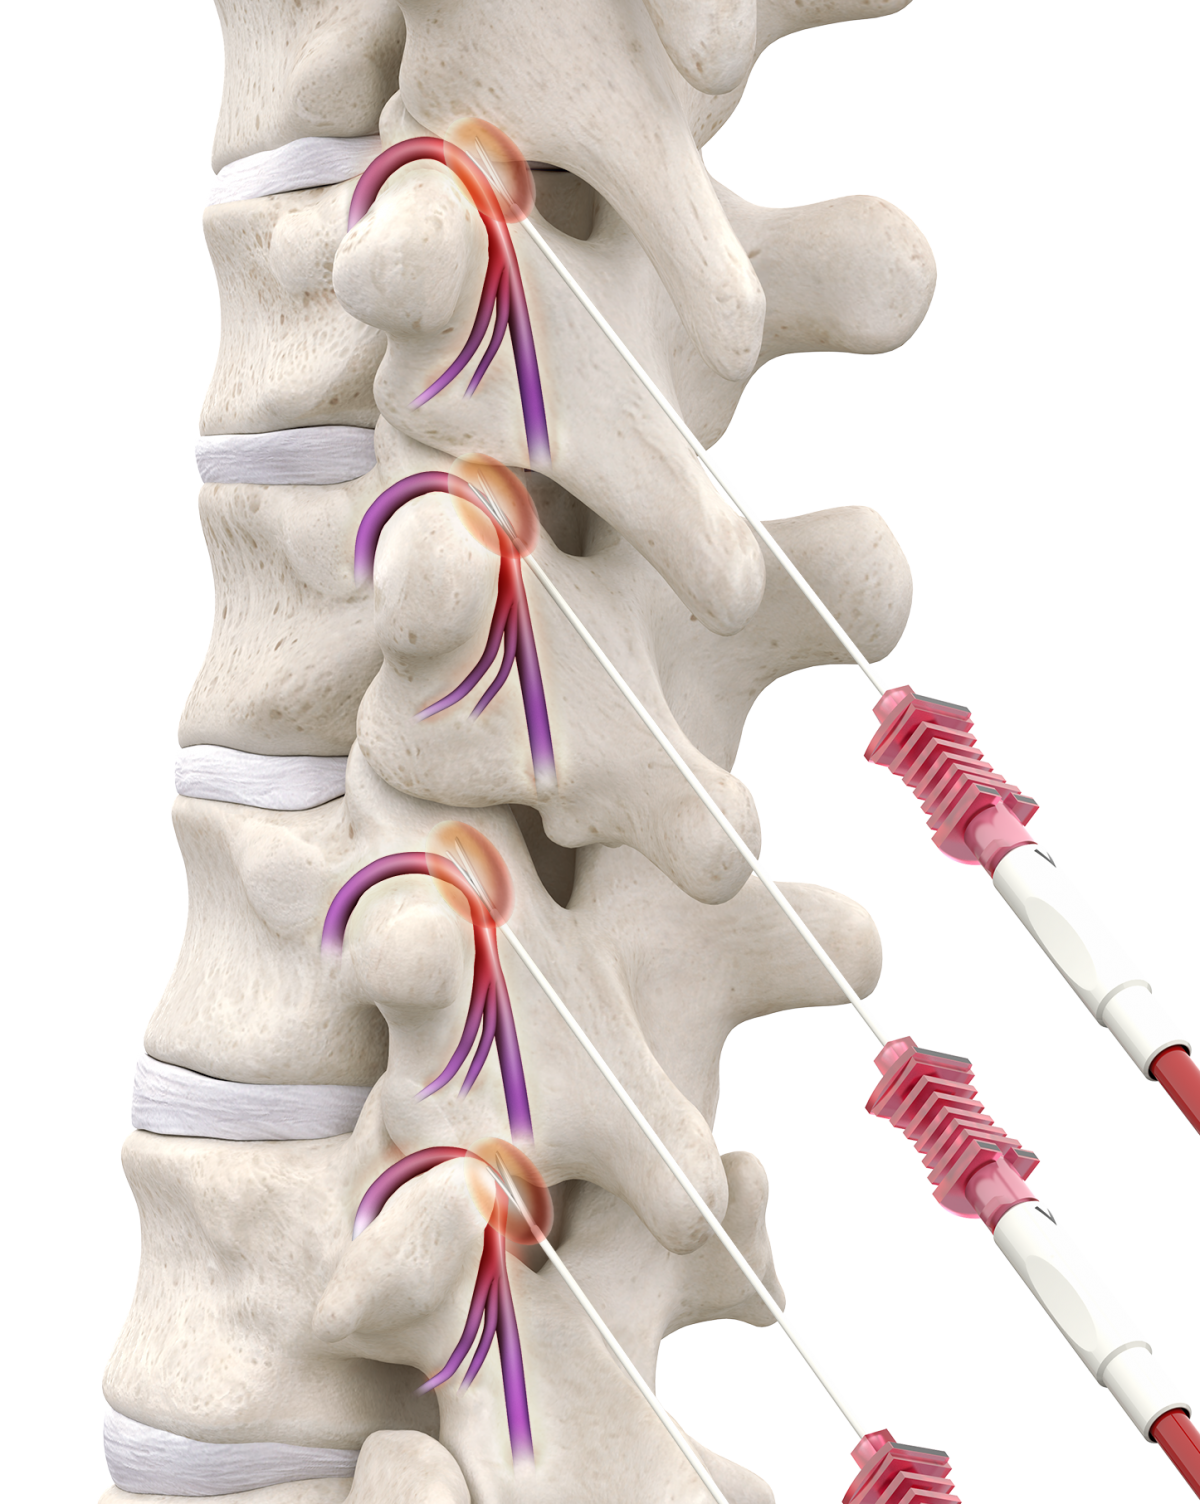 Radiofrequency Ablation Interventional Spine